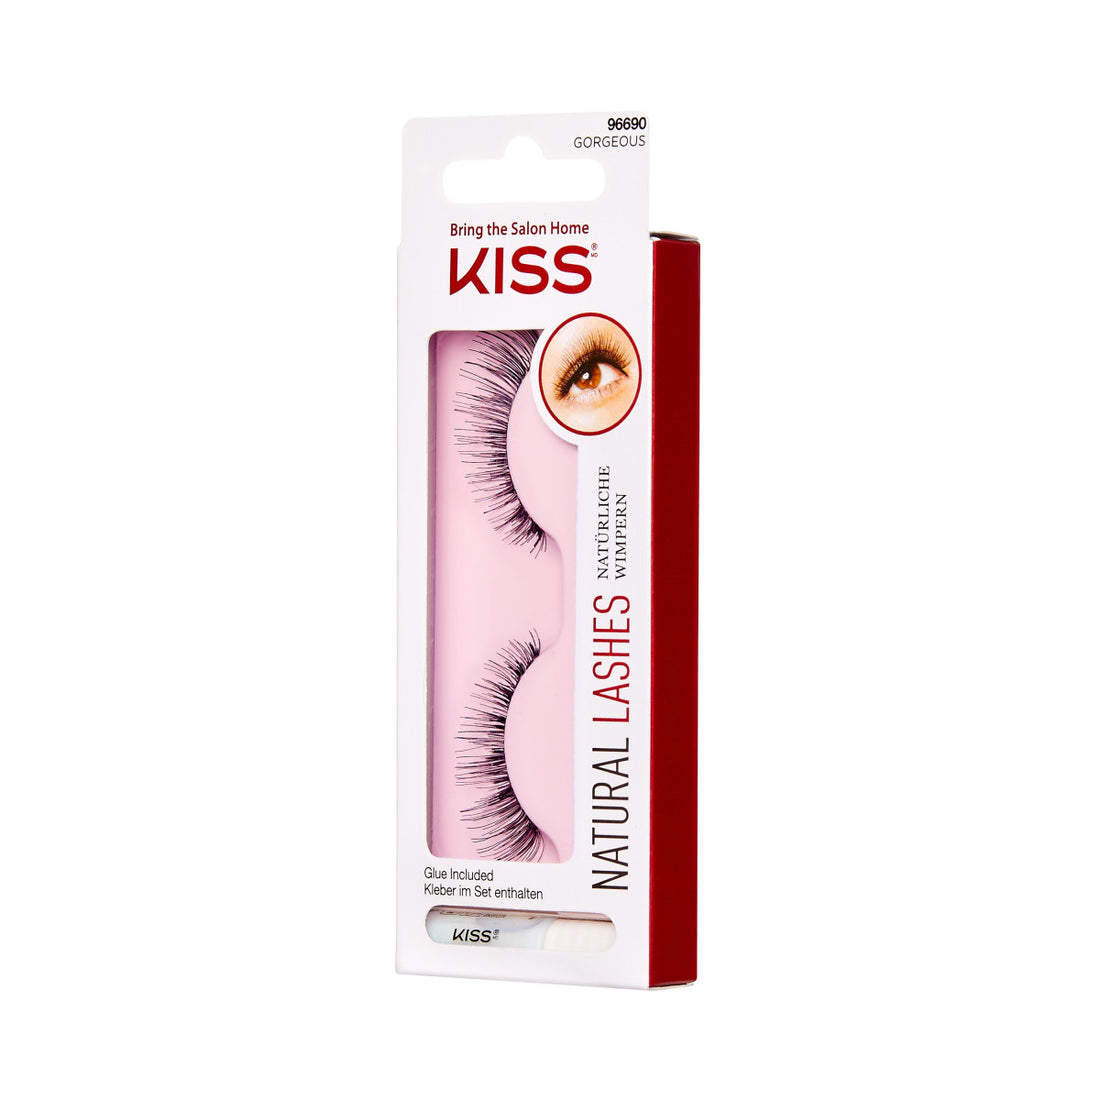 KISS Natural Lashes, Style ‘Gorgeous’, 1 Pair &amp; Lash Glue Net Wt. 1g (0.035.oz.)